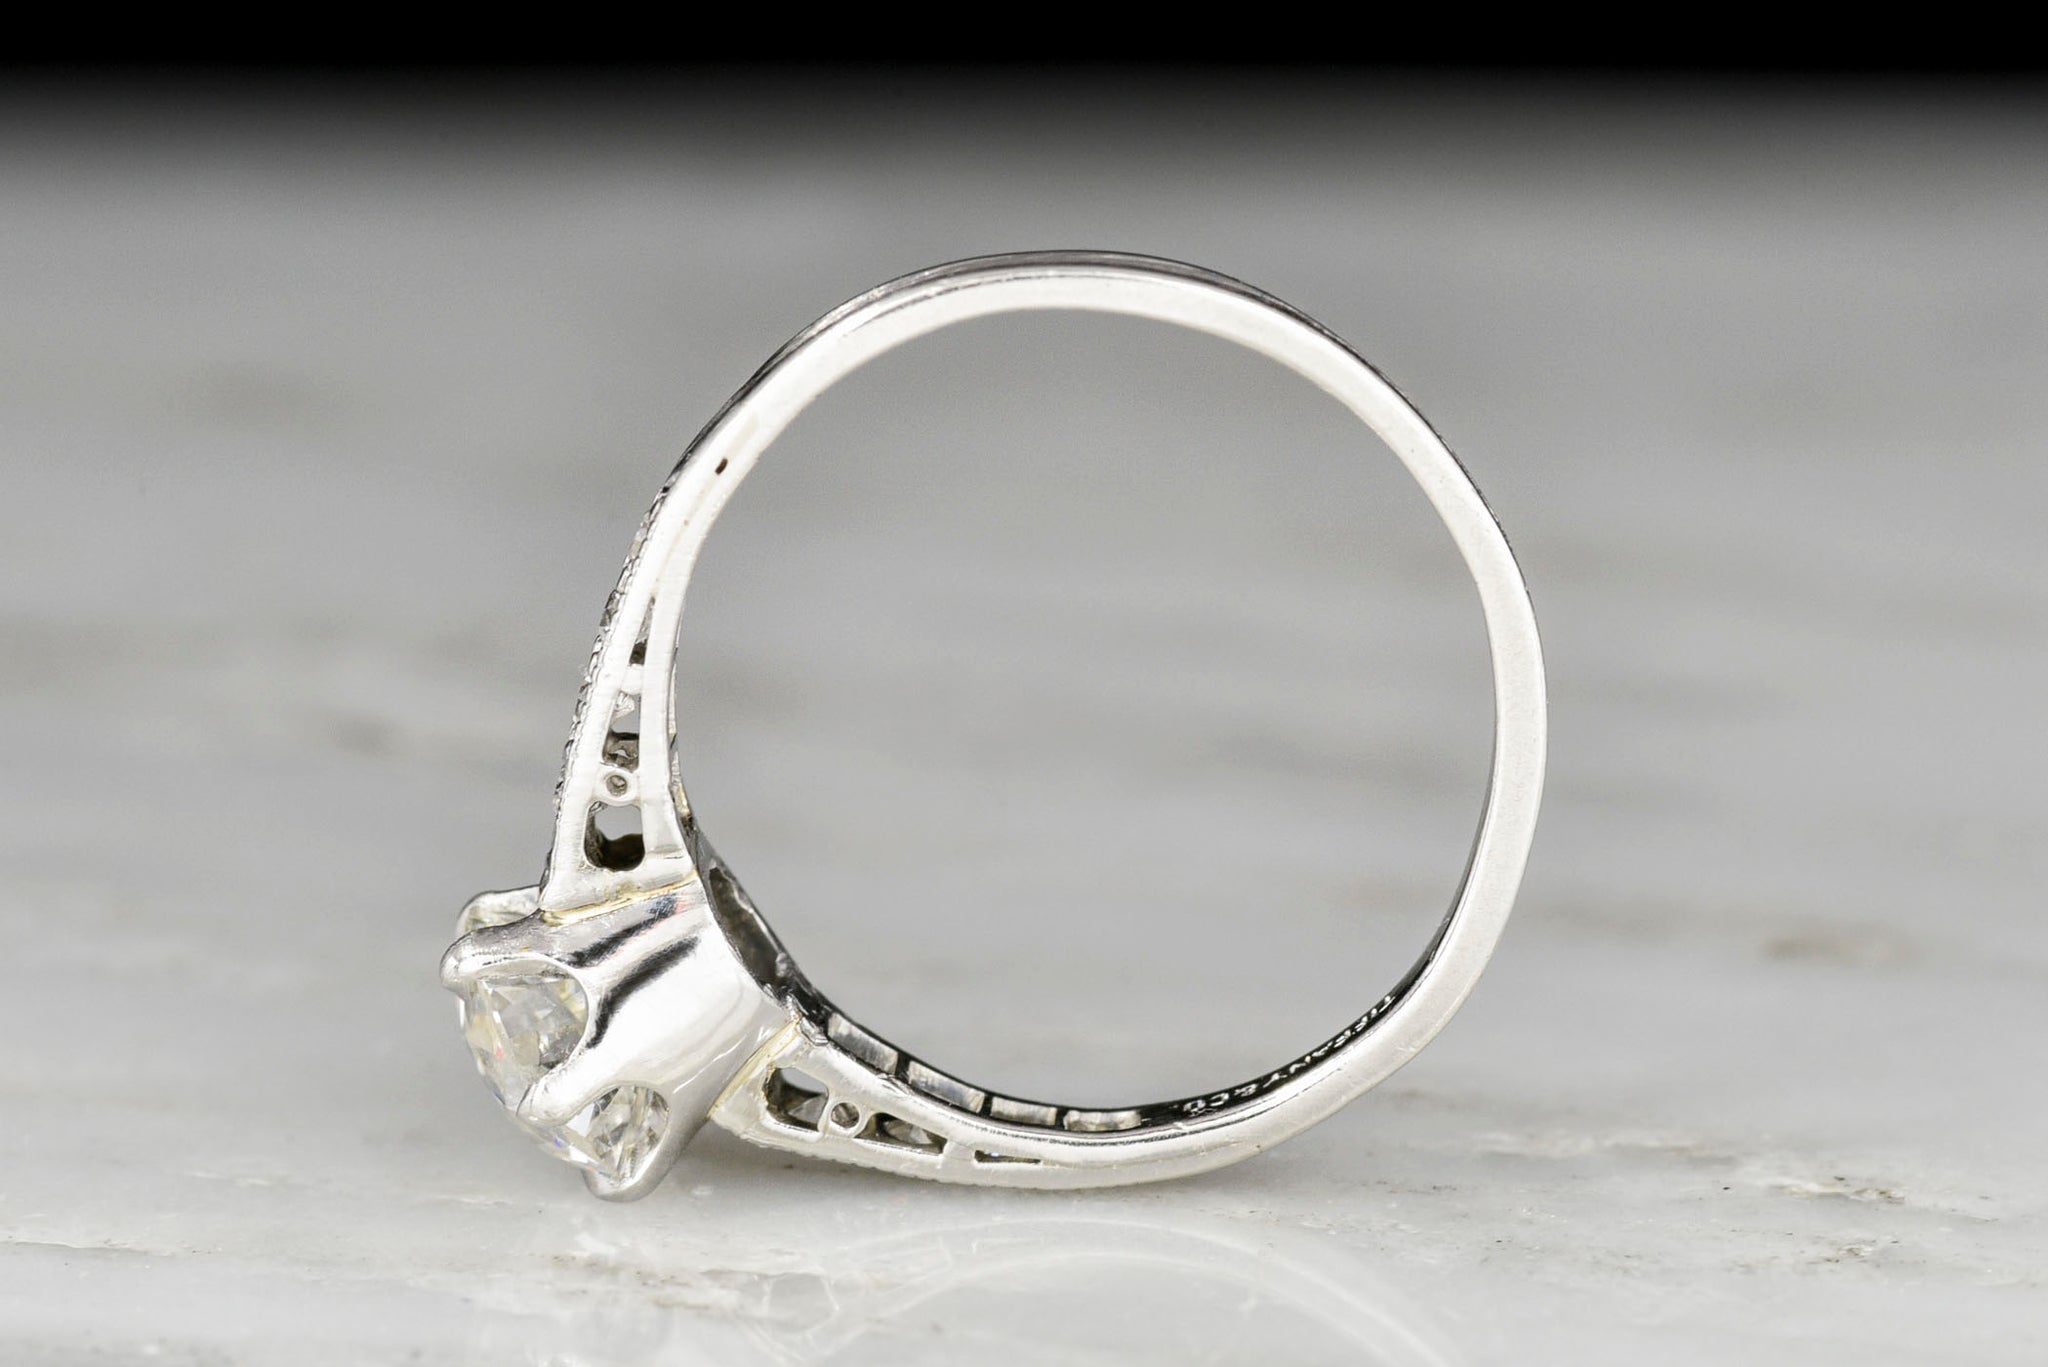 Tiffany & Co. Pre-Owned Platinum Art Deco Diamond Ring - Farfetch